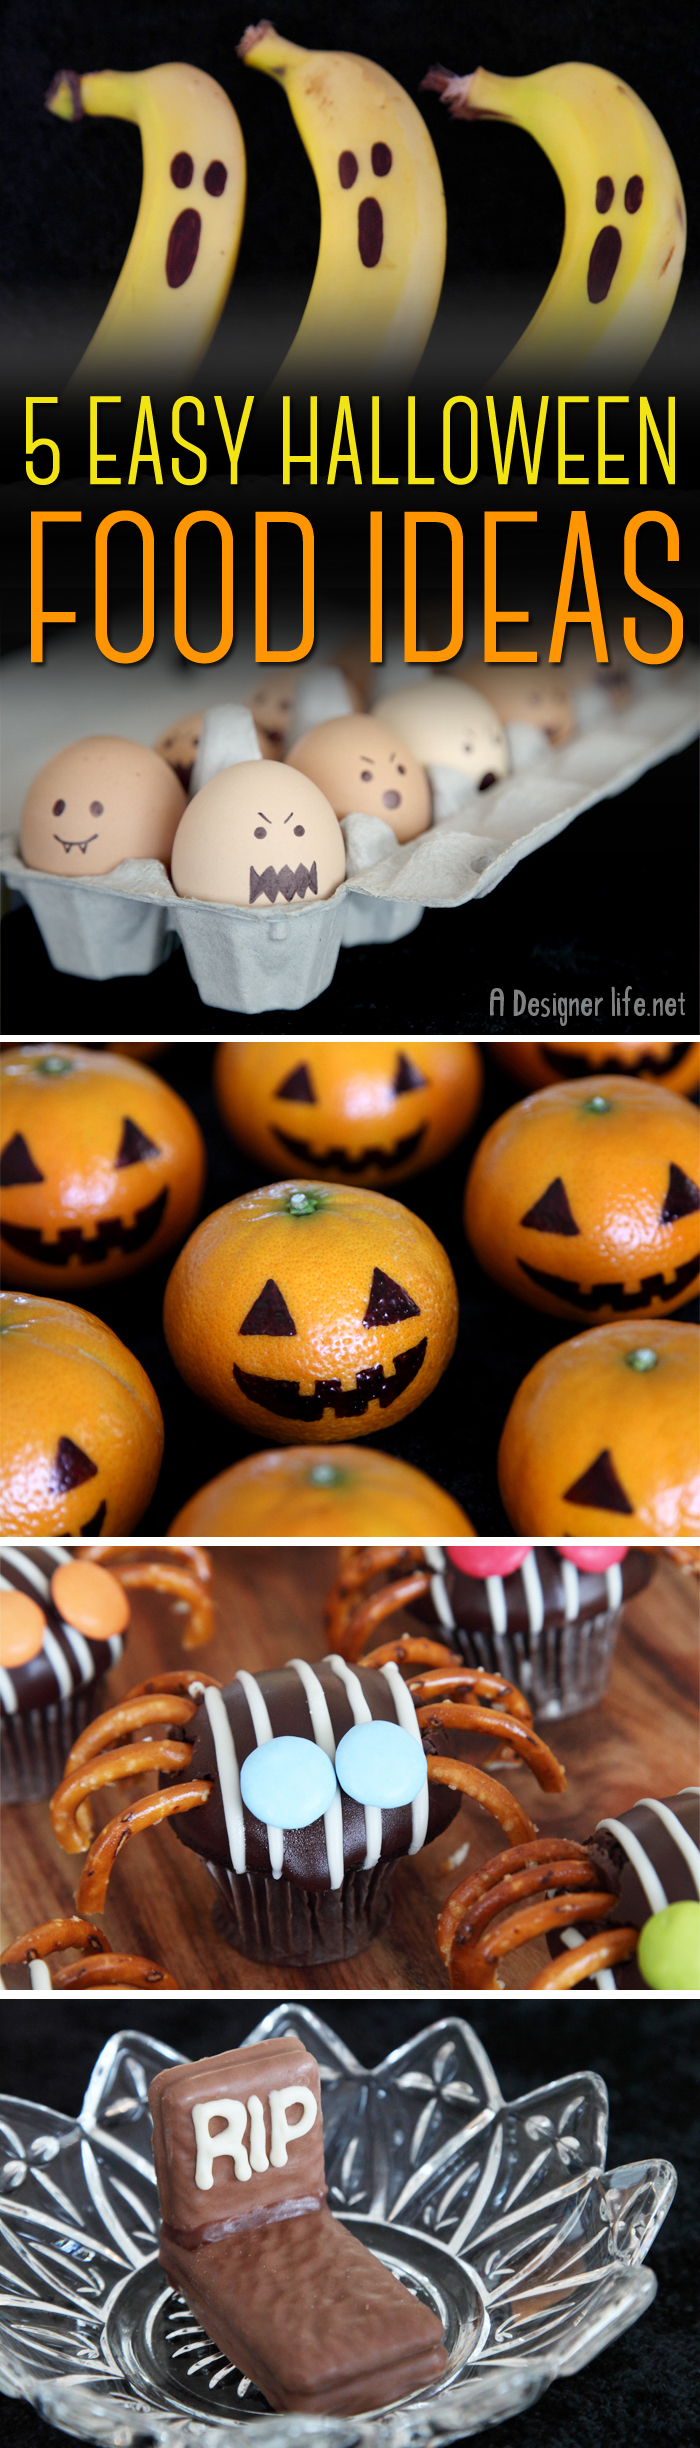 5 Easy Halloween Food Ideas - Boo-nanas, Mandarin Pumpkins, Ghost Eggs, Mini Cupcake Spiders, Tim Tam Tombstones | A Designer Life